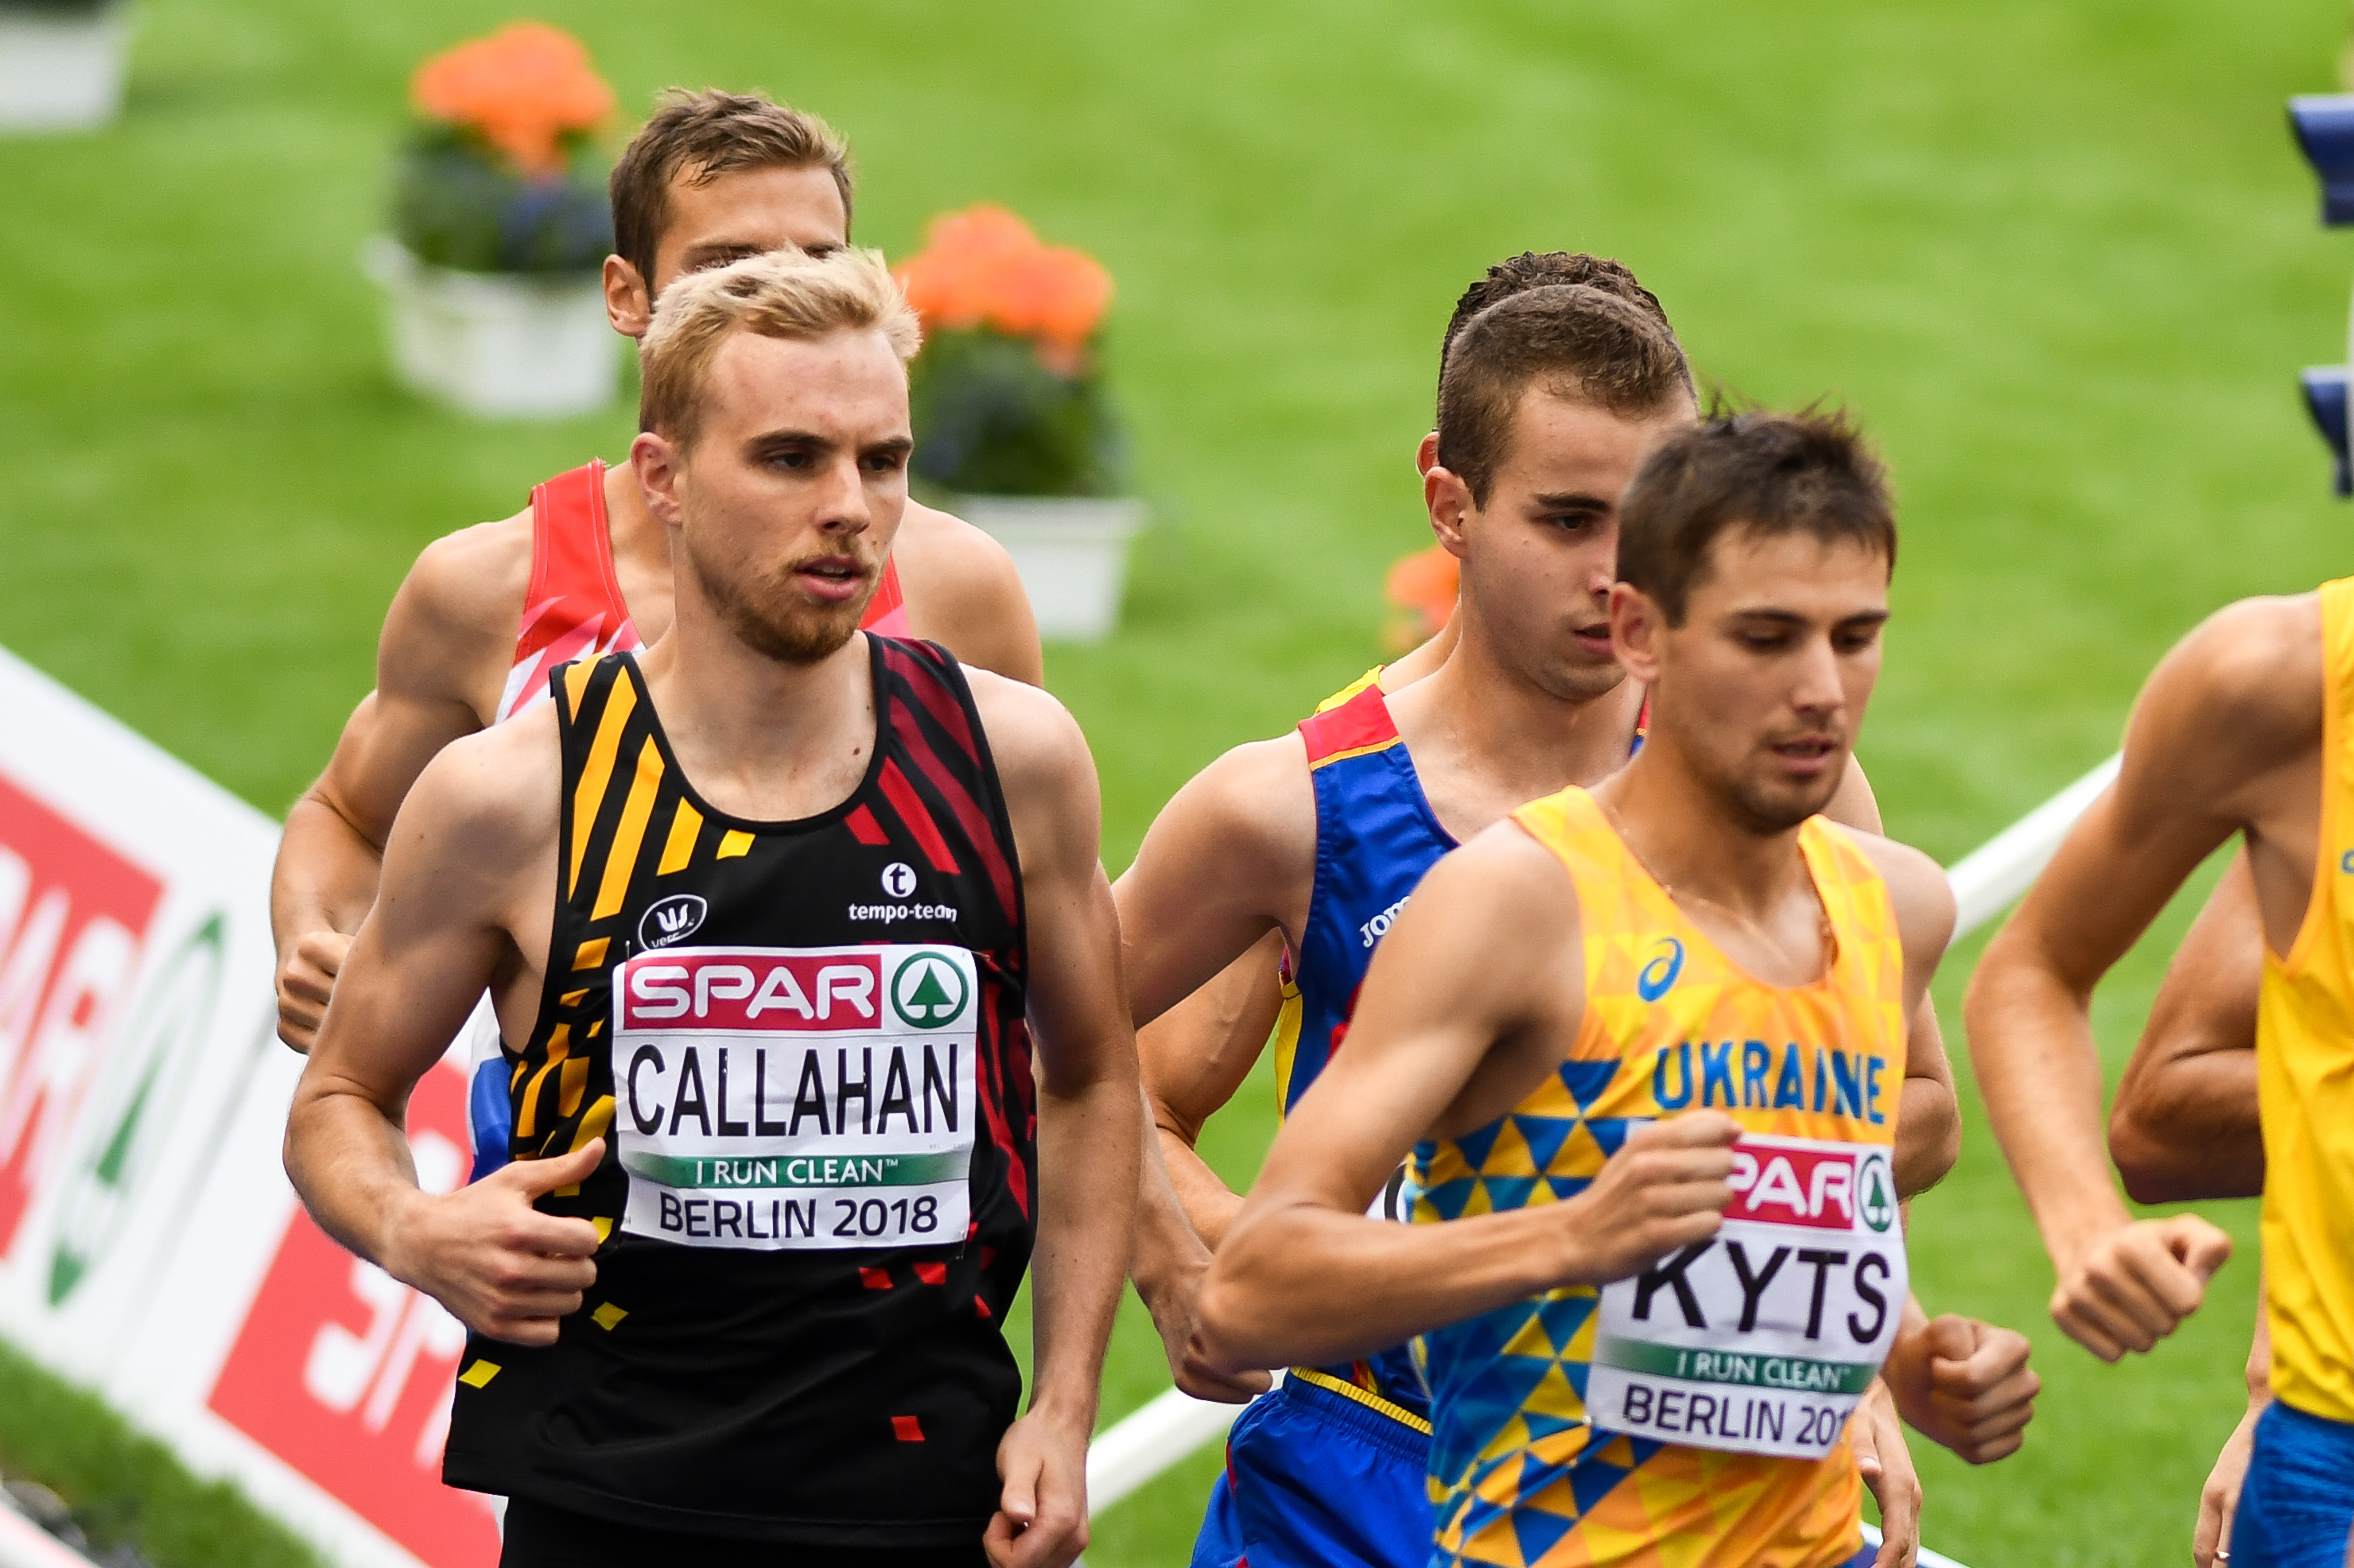 Peter Callahan 1500m Berlijn 2018